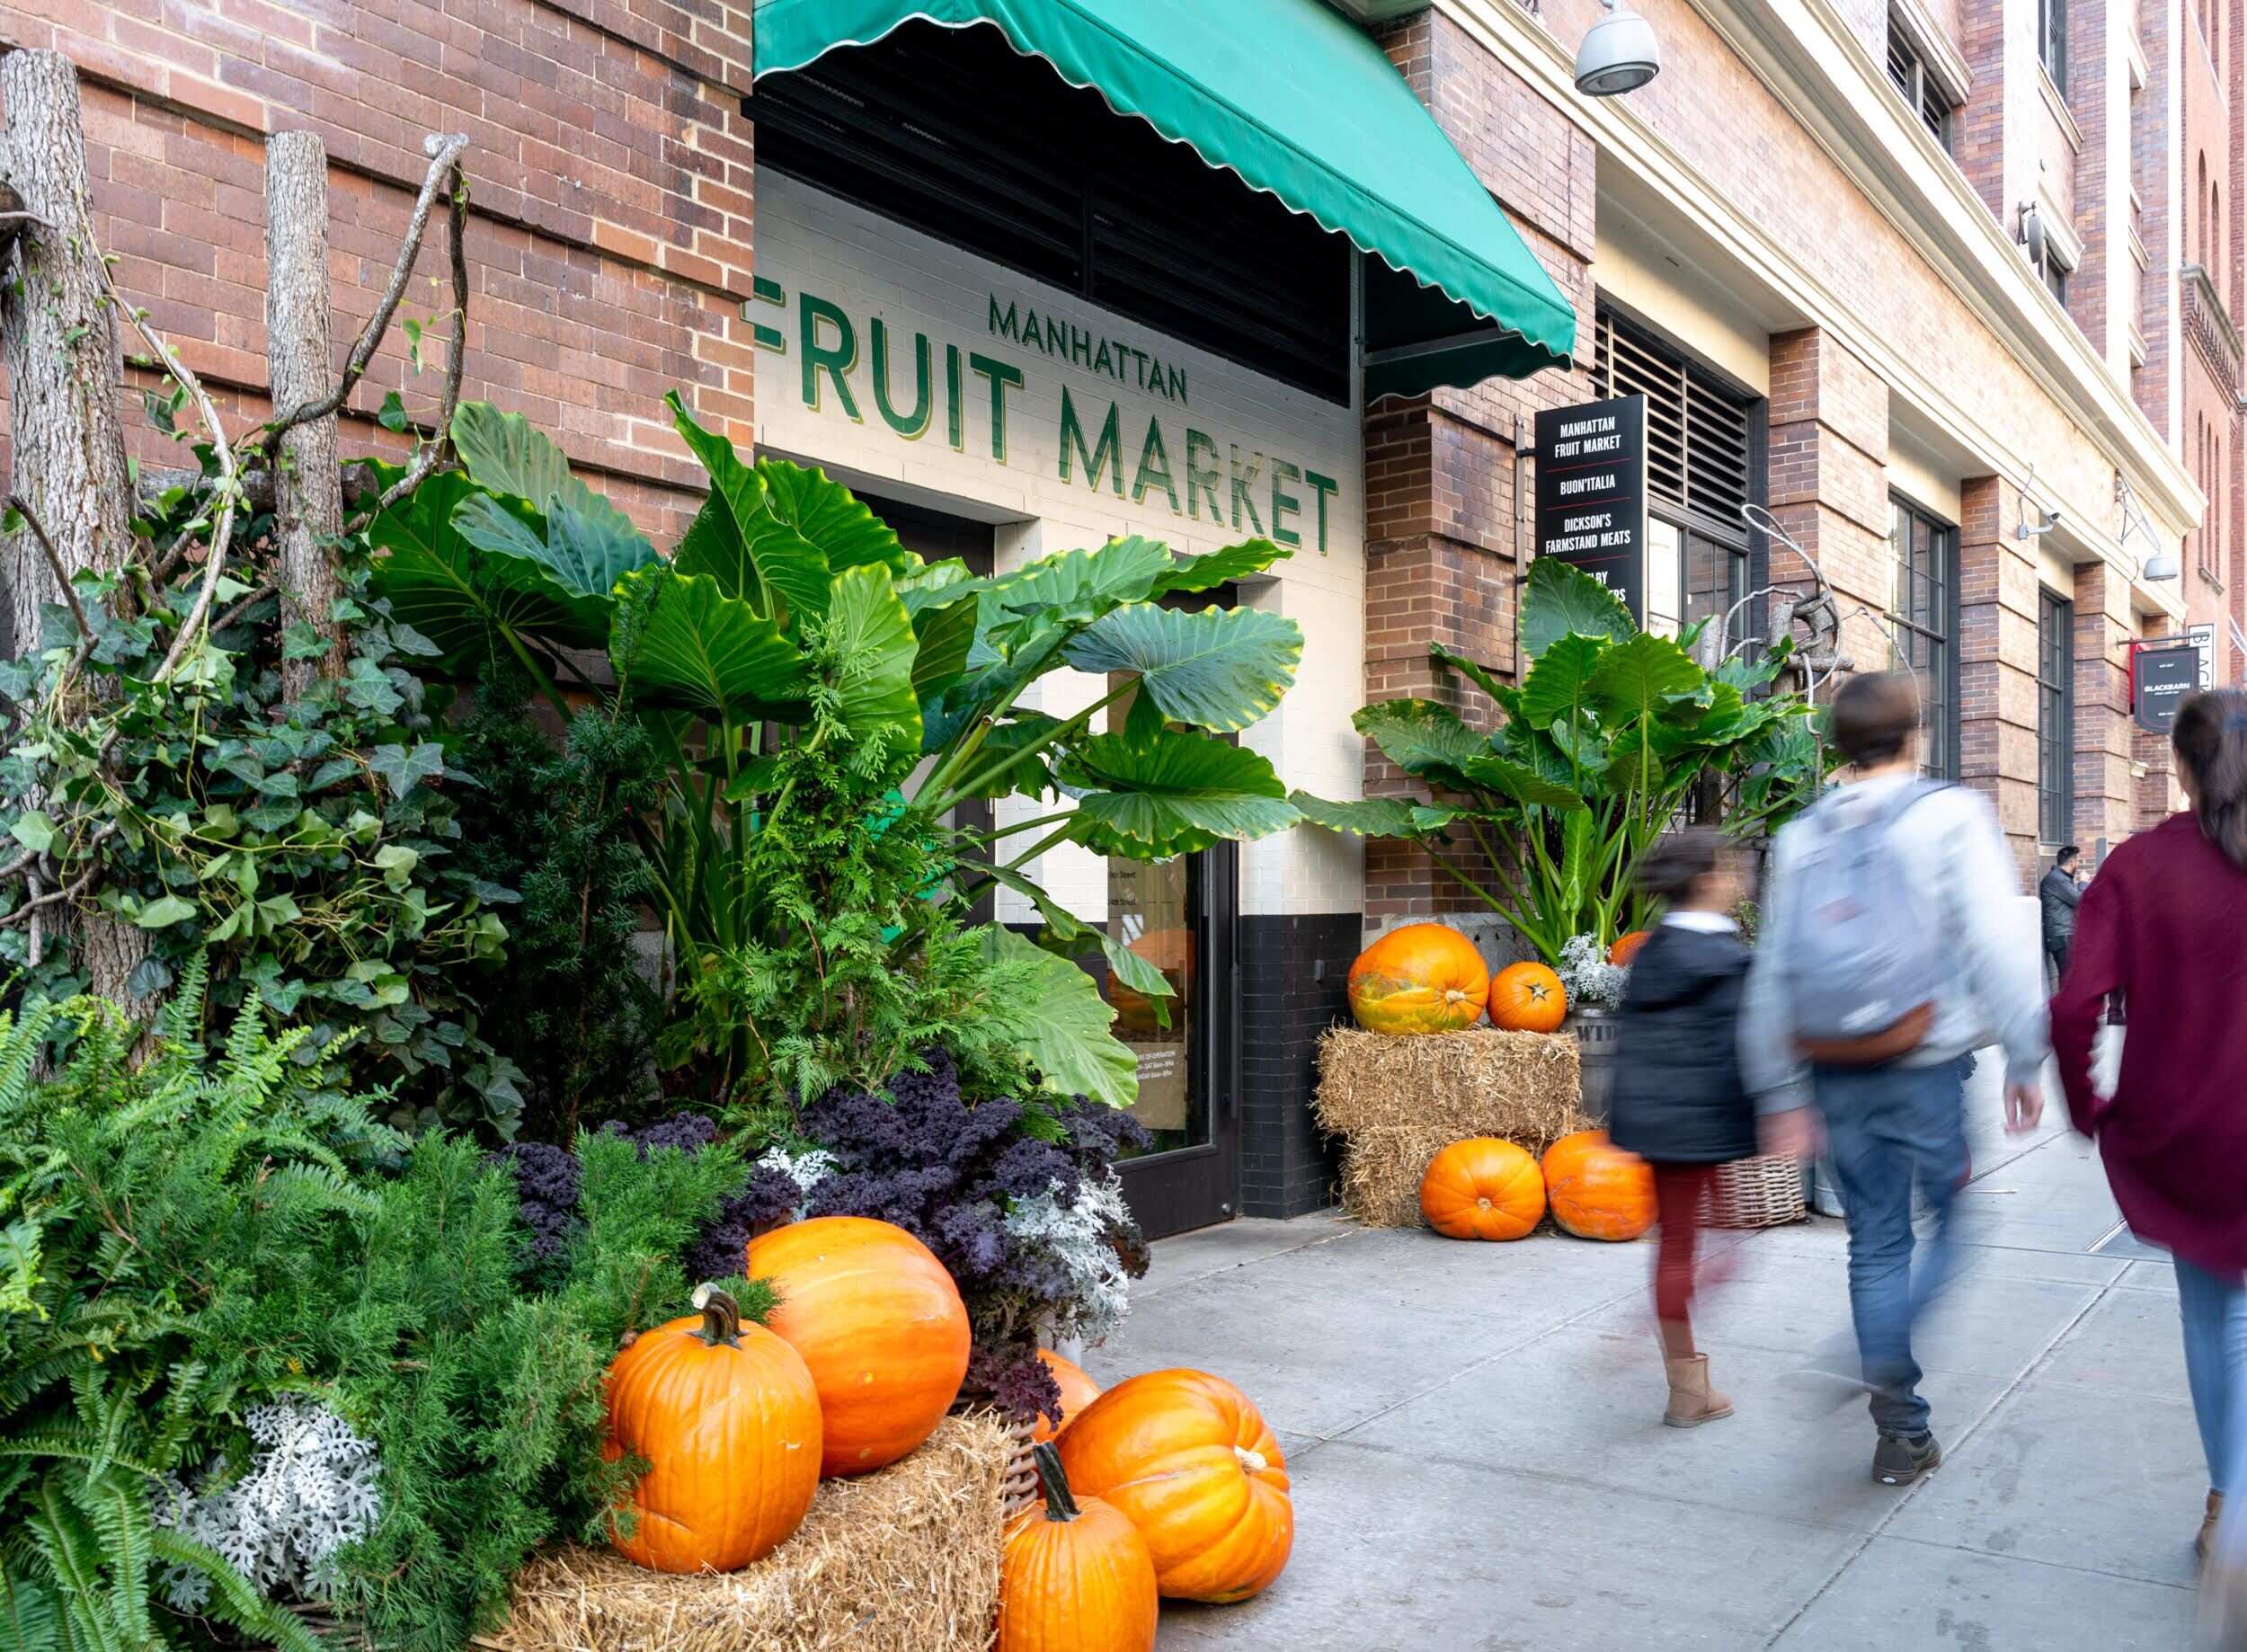 Exterior entrance to Manhattan Fruit Market with green plants and pumpkins surrounding door 